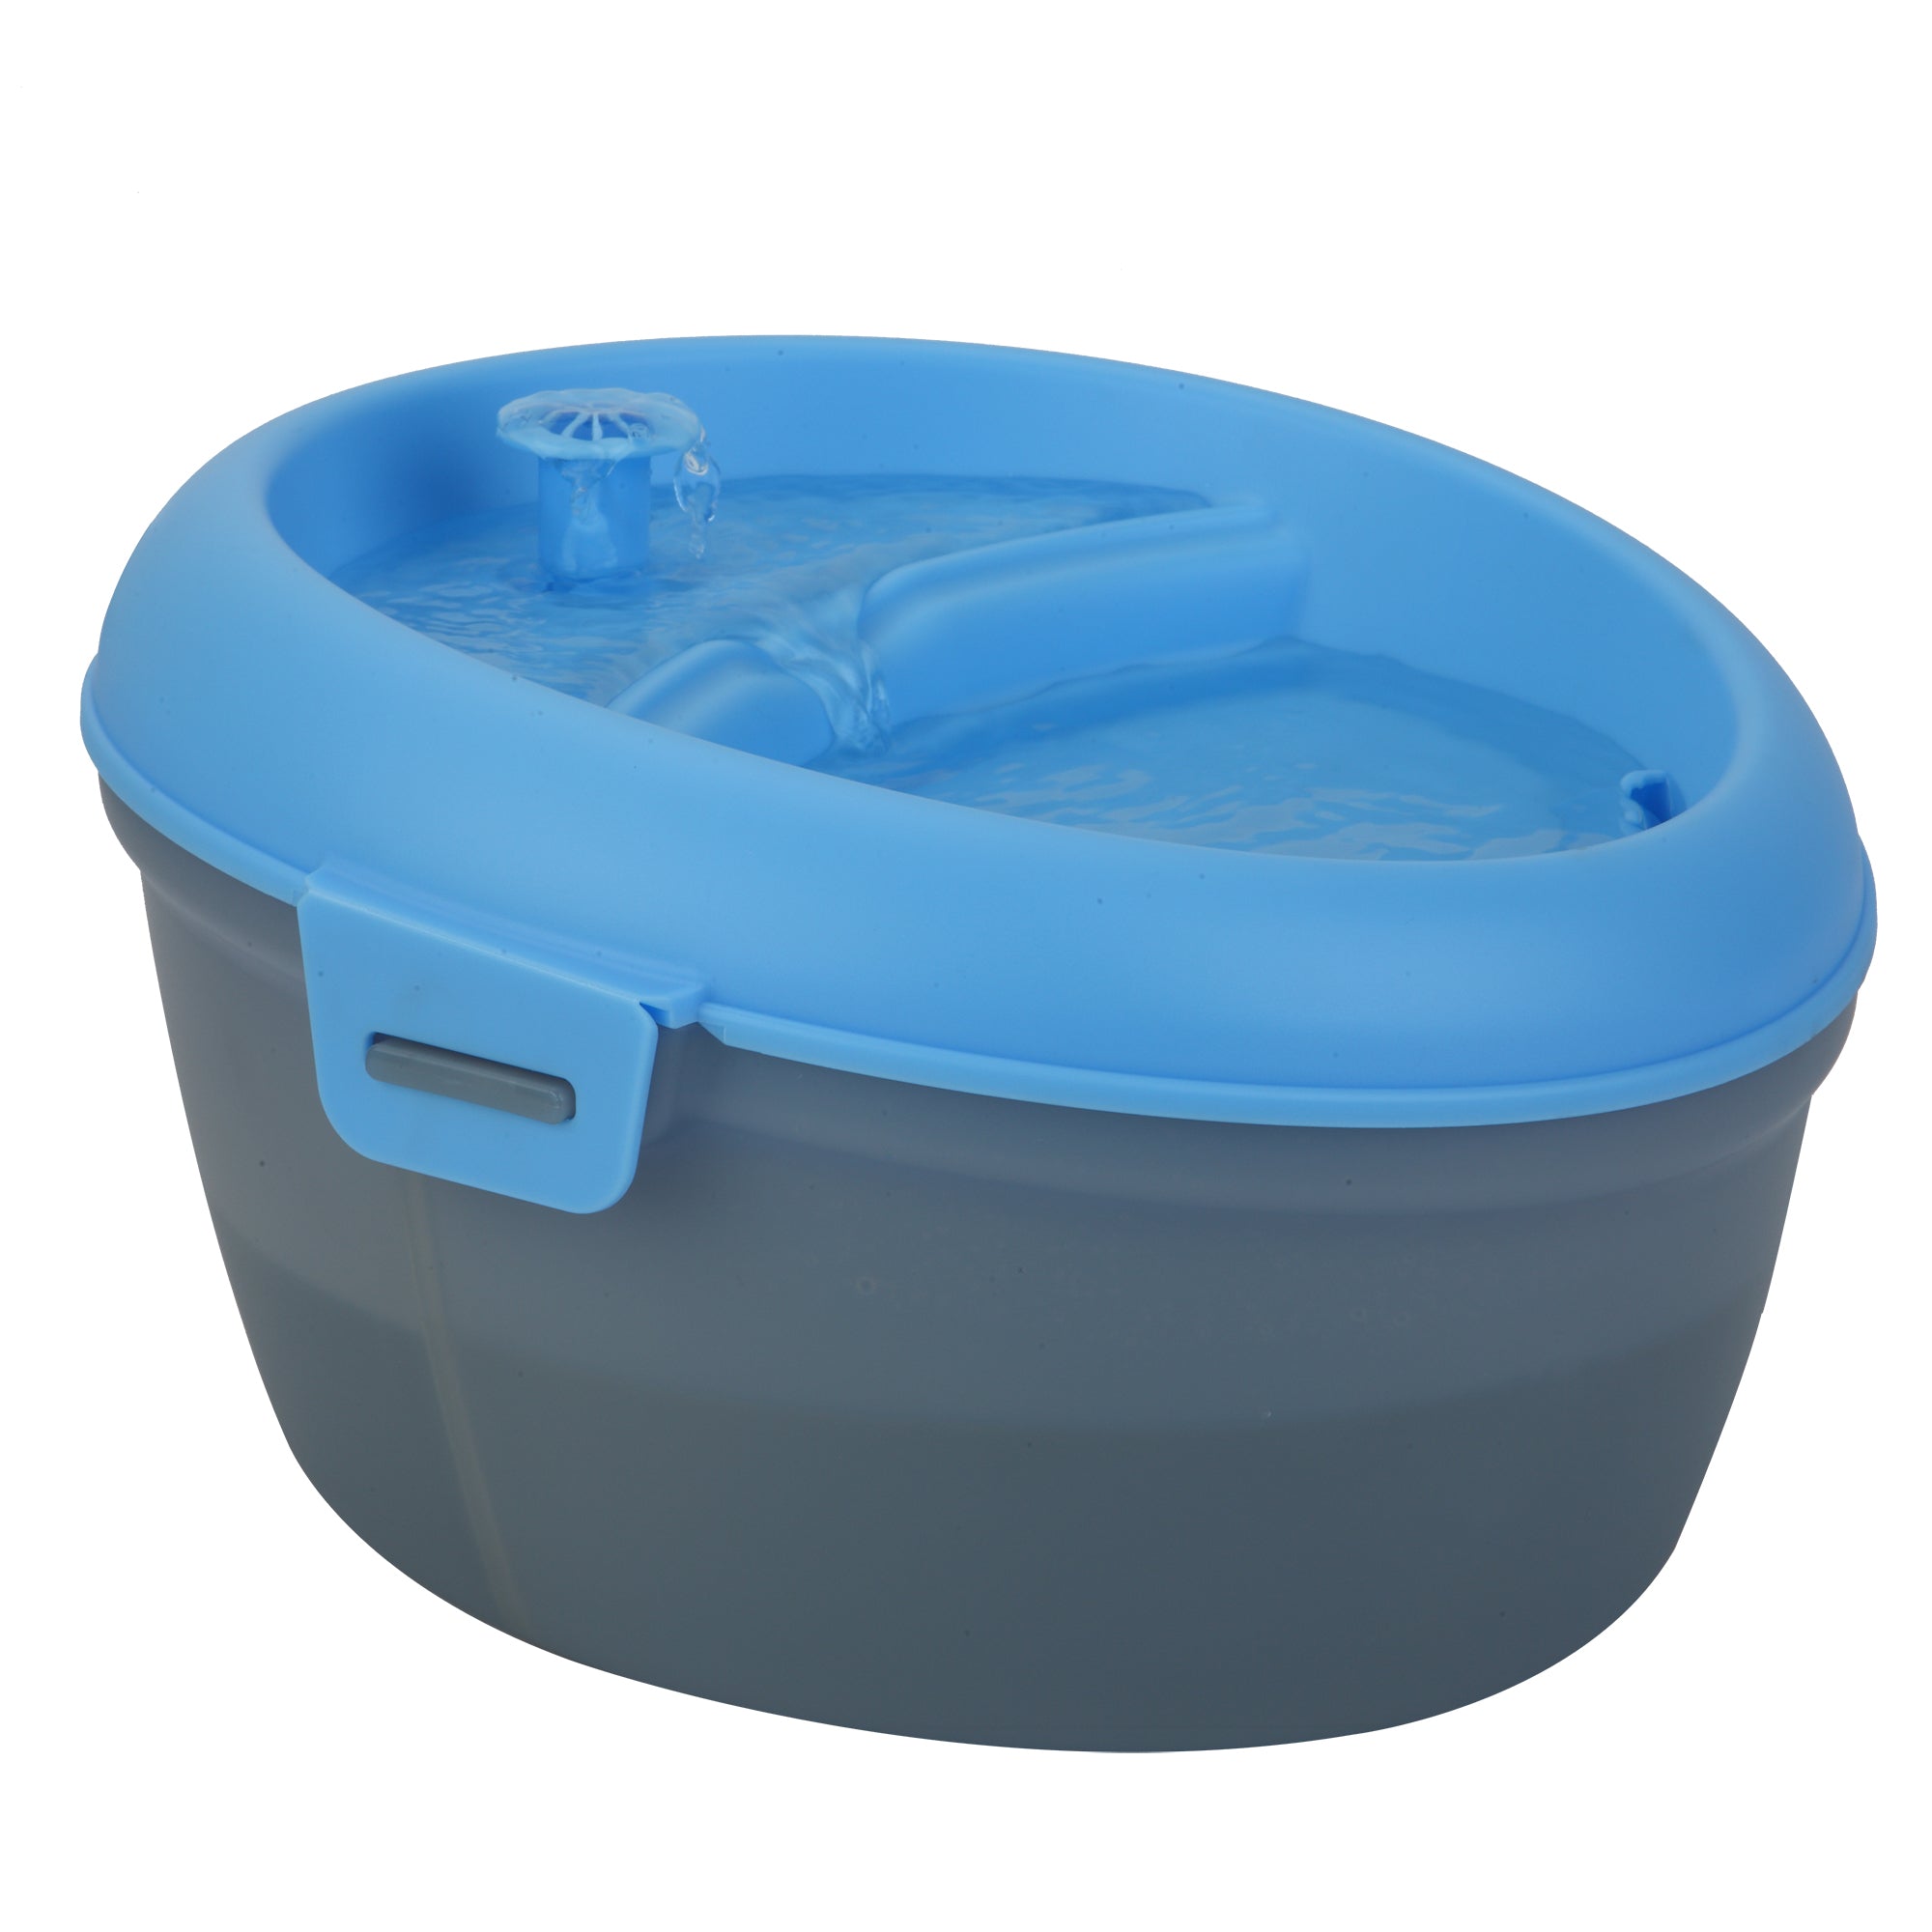 CoolerDog Healthspring pet fountain, 6 liter, blue/gray, top view, water running